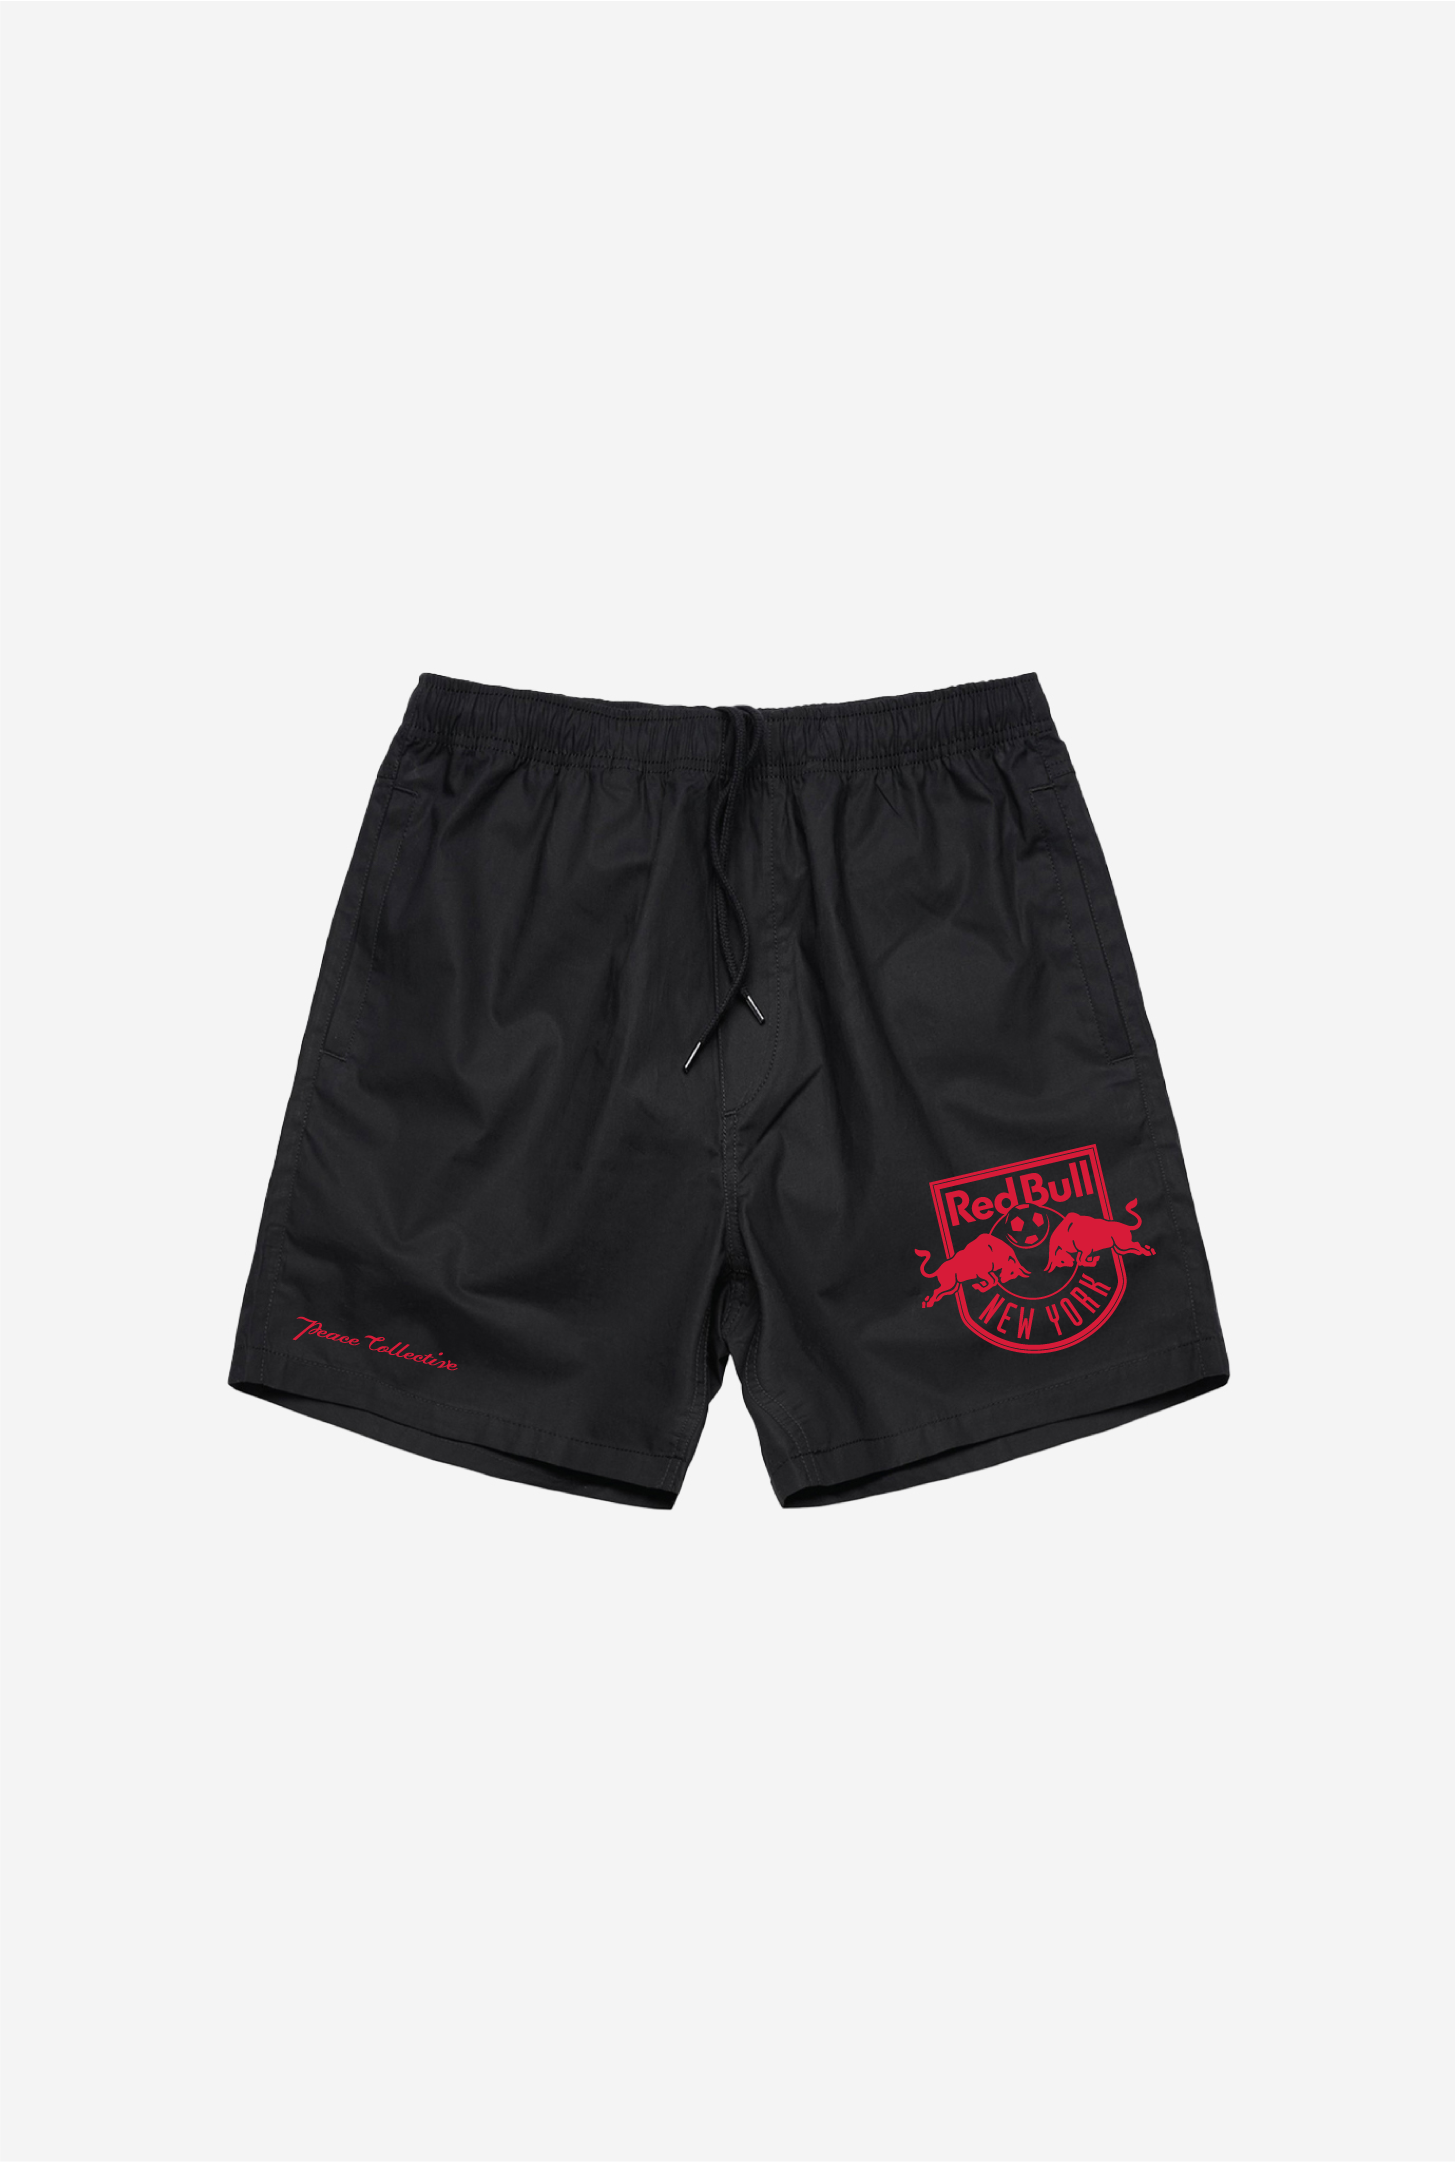 New York Red Bulls Board Shorts - Black